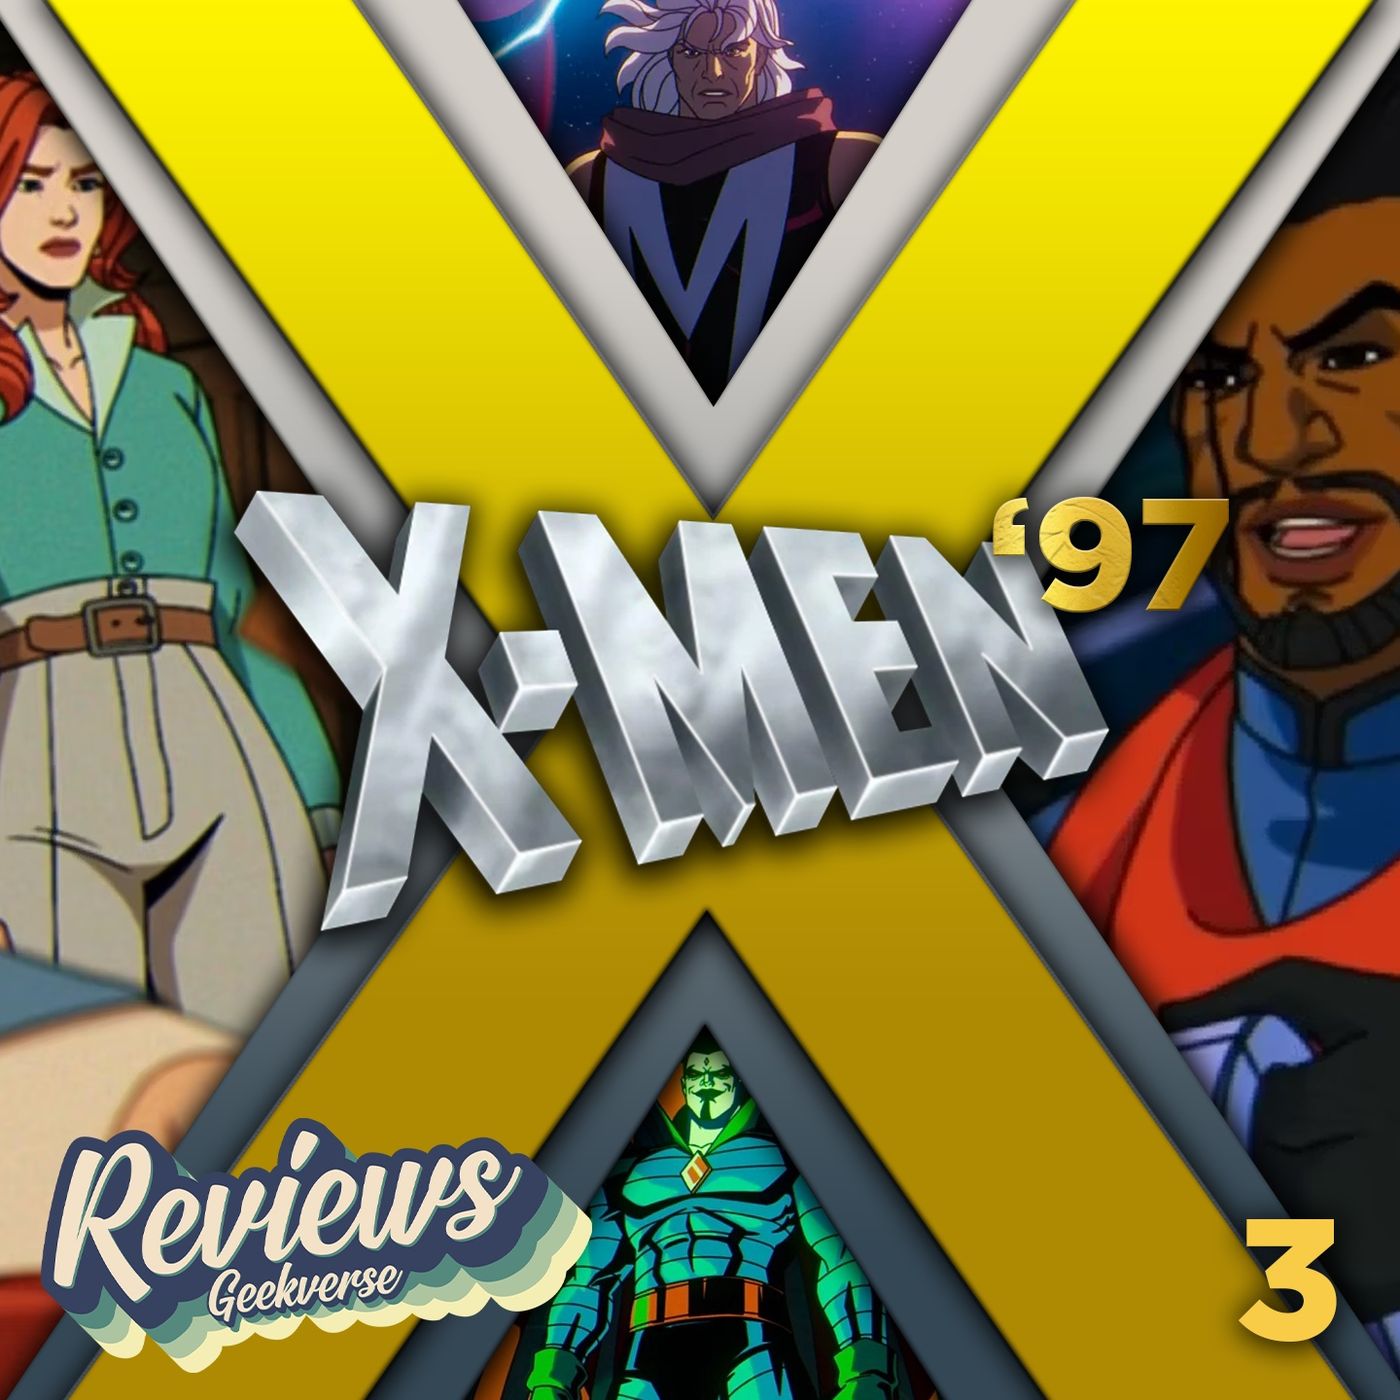 X-Men 97 Episode 3 Spoilers Review